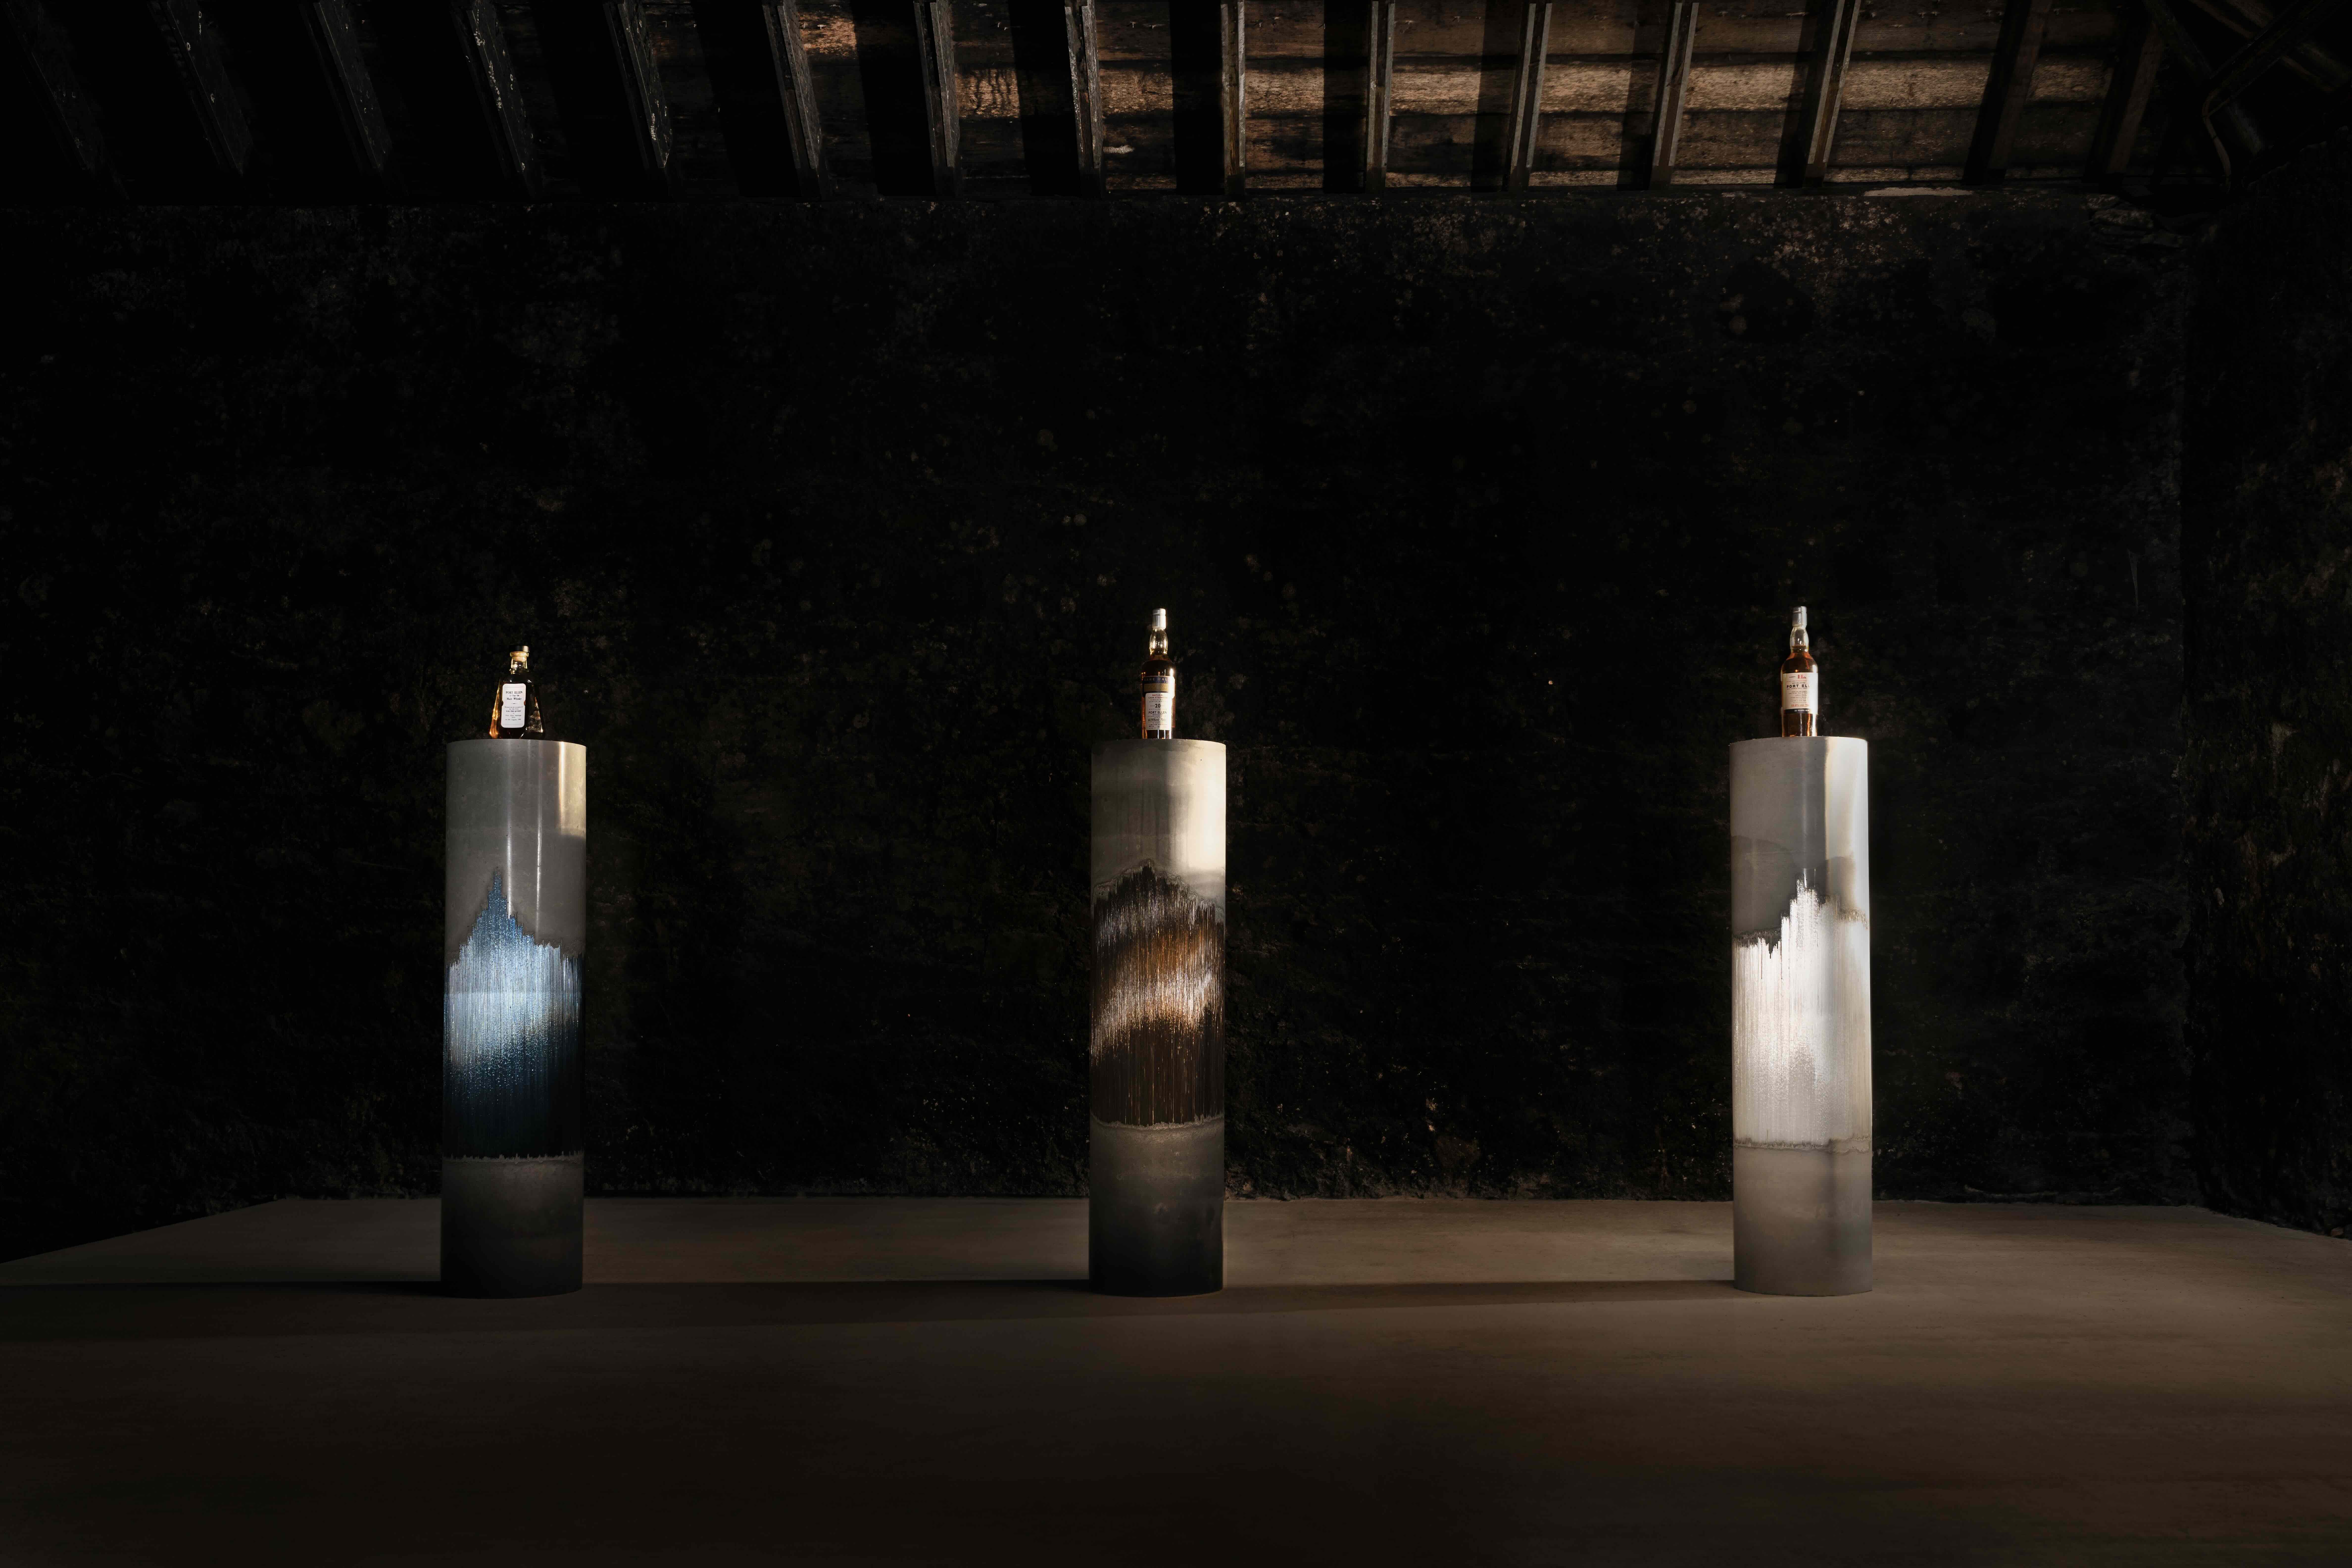 Port Ellen whisky bottles on artist-designed columns